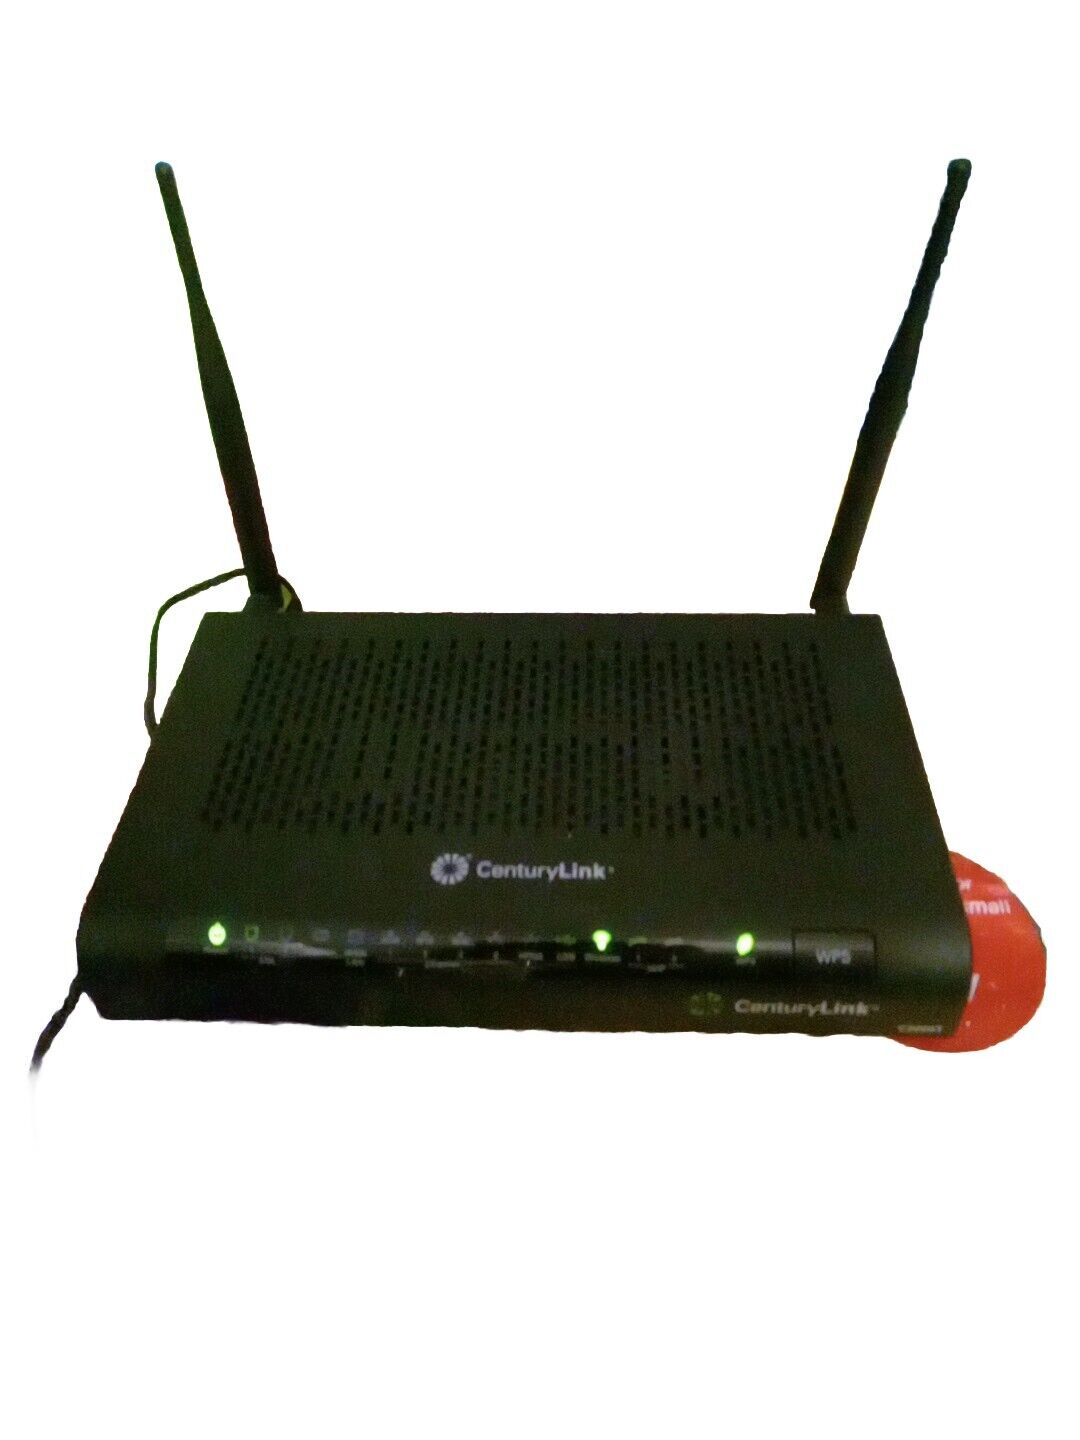 TESTED🛜CenturyLink Technicolor C2000T Wireless 802.11N ADSL2+VDSL Modem Router 